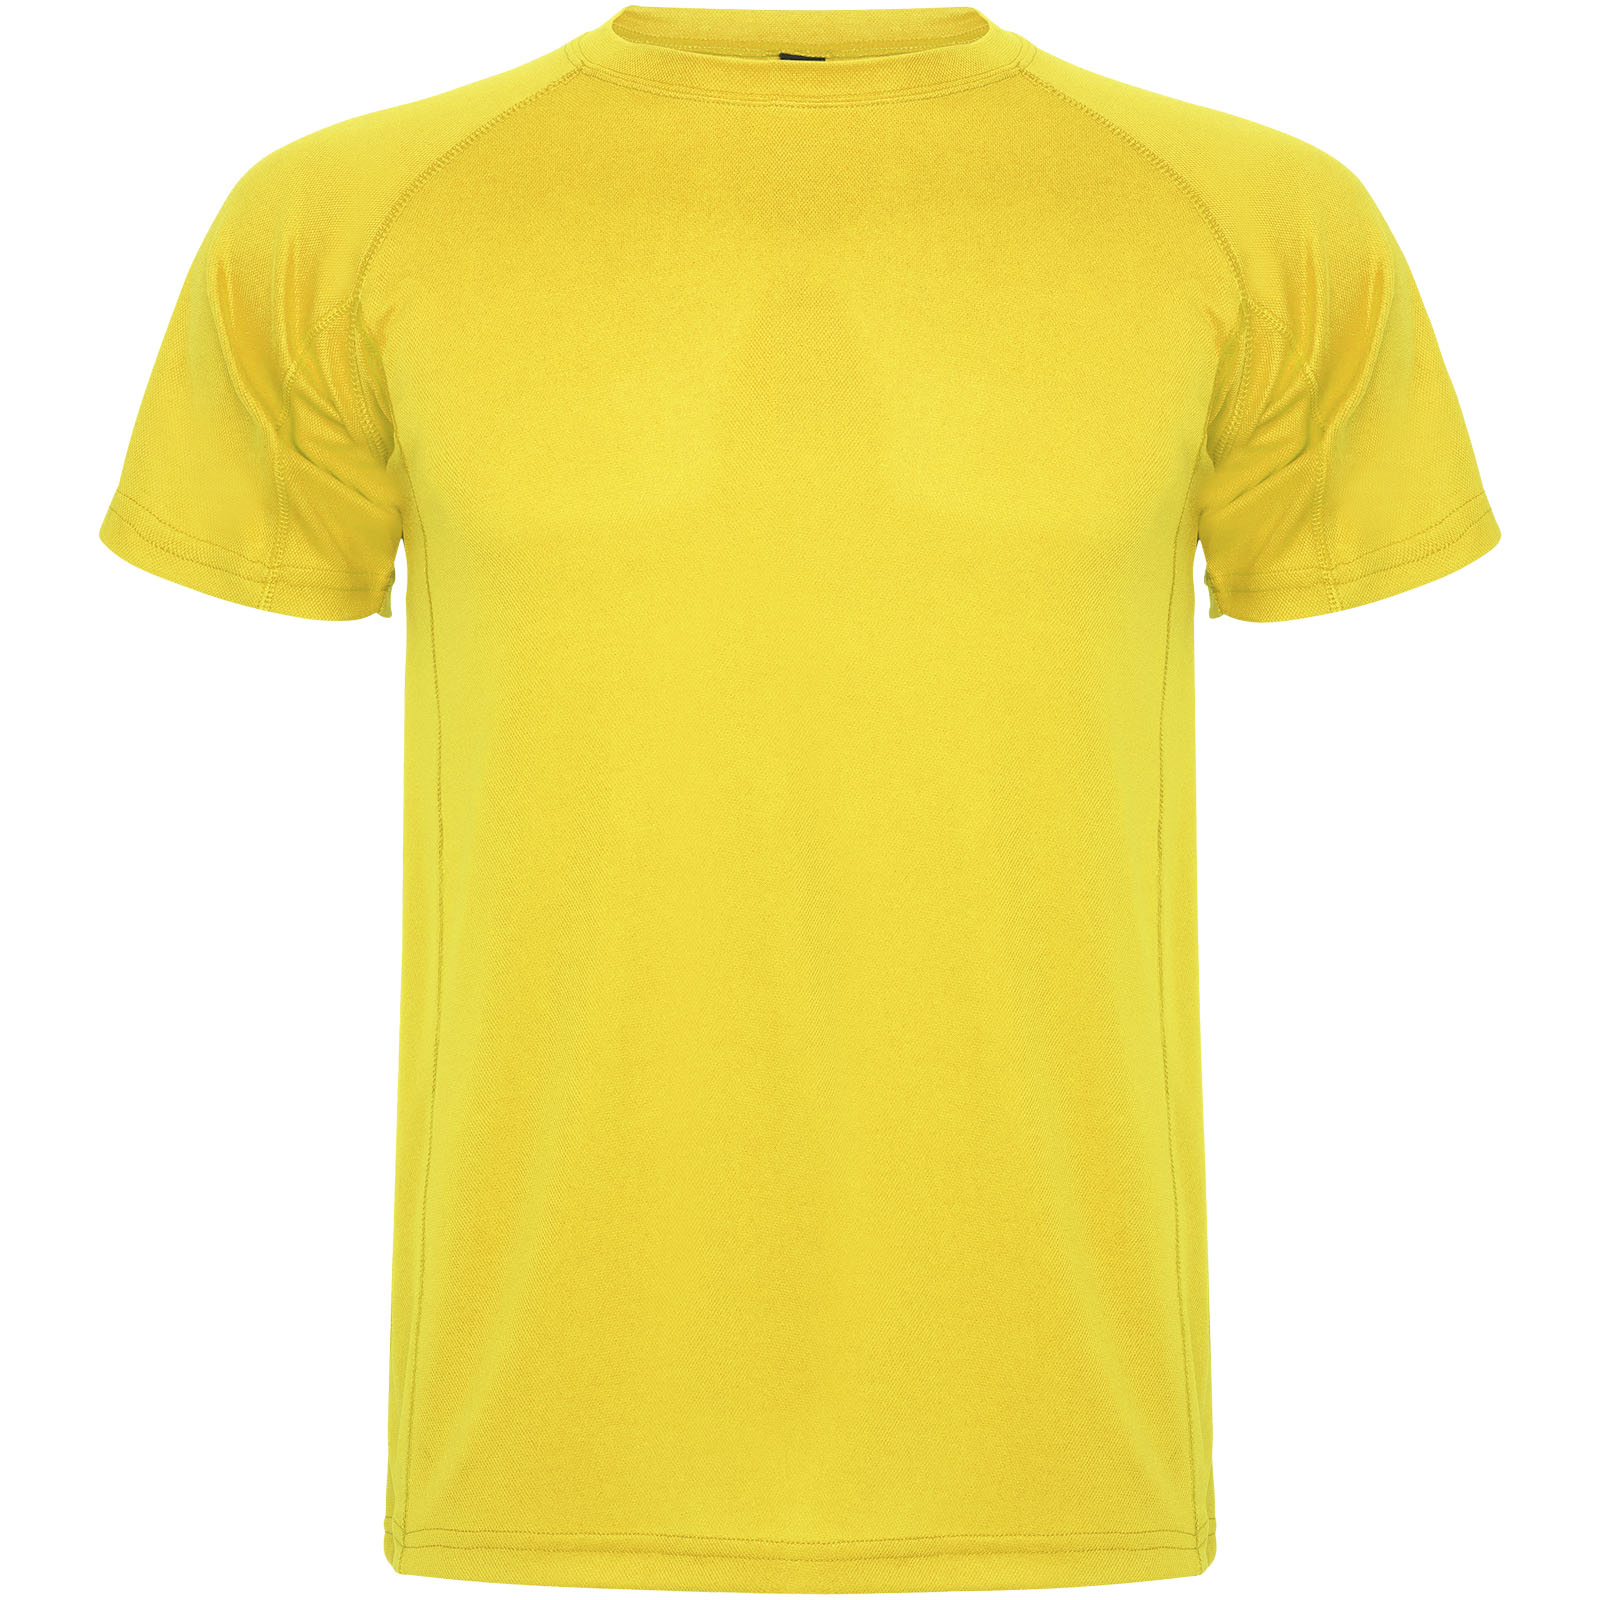 Advertising T-shirts - Montecarlo short sleeve men's sports t-shirt - 0